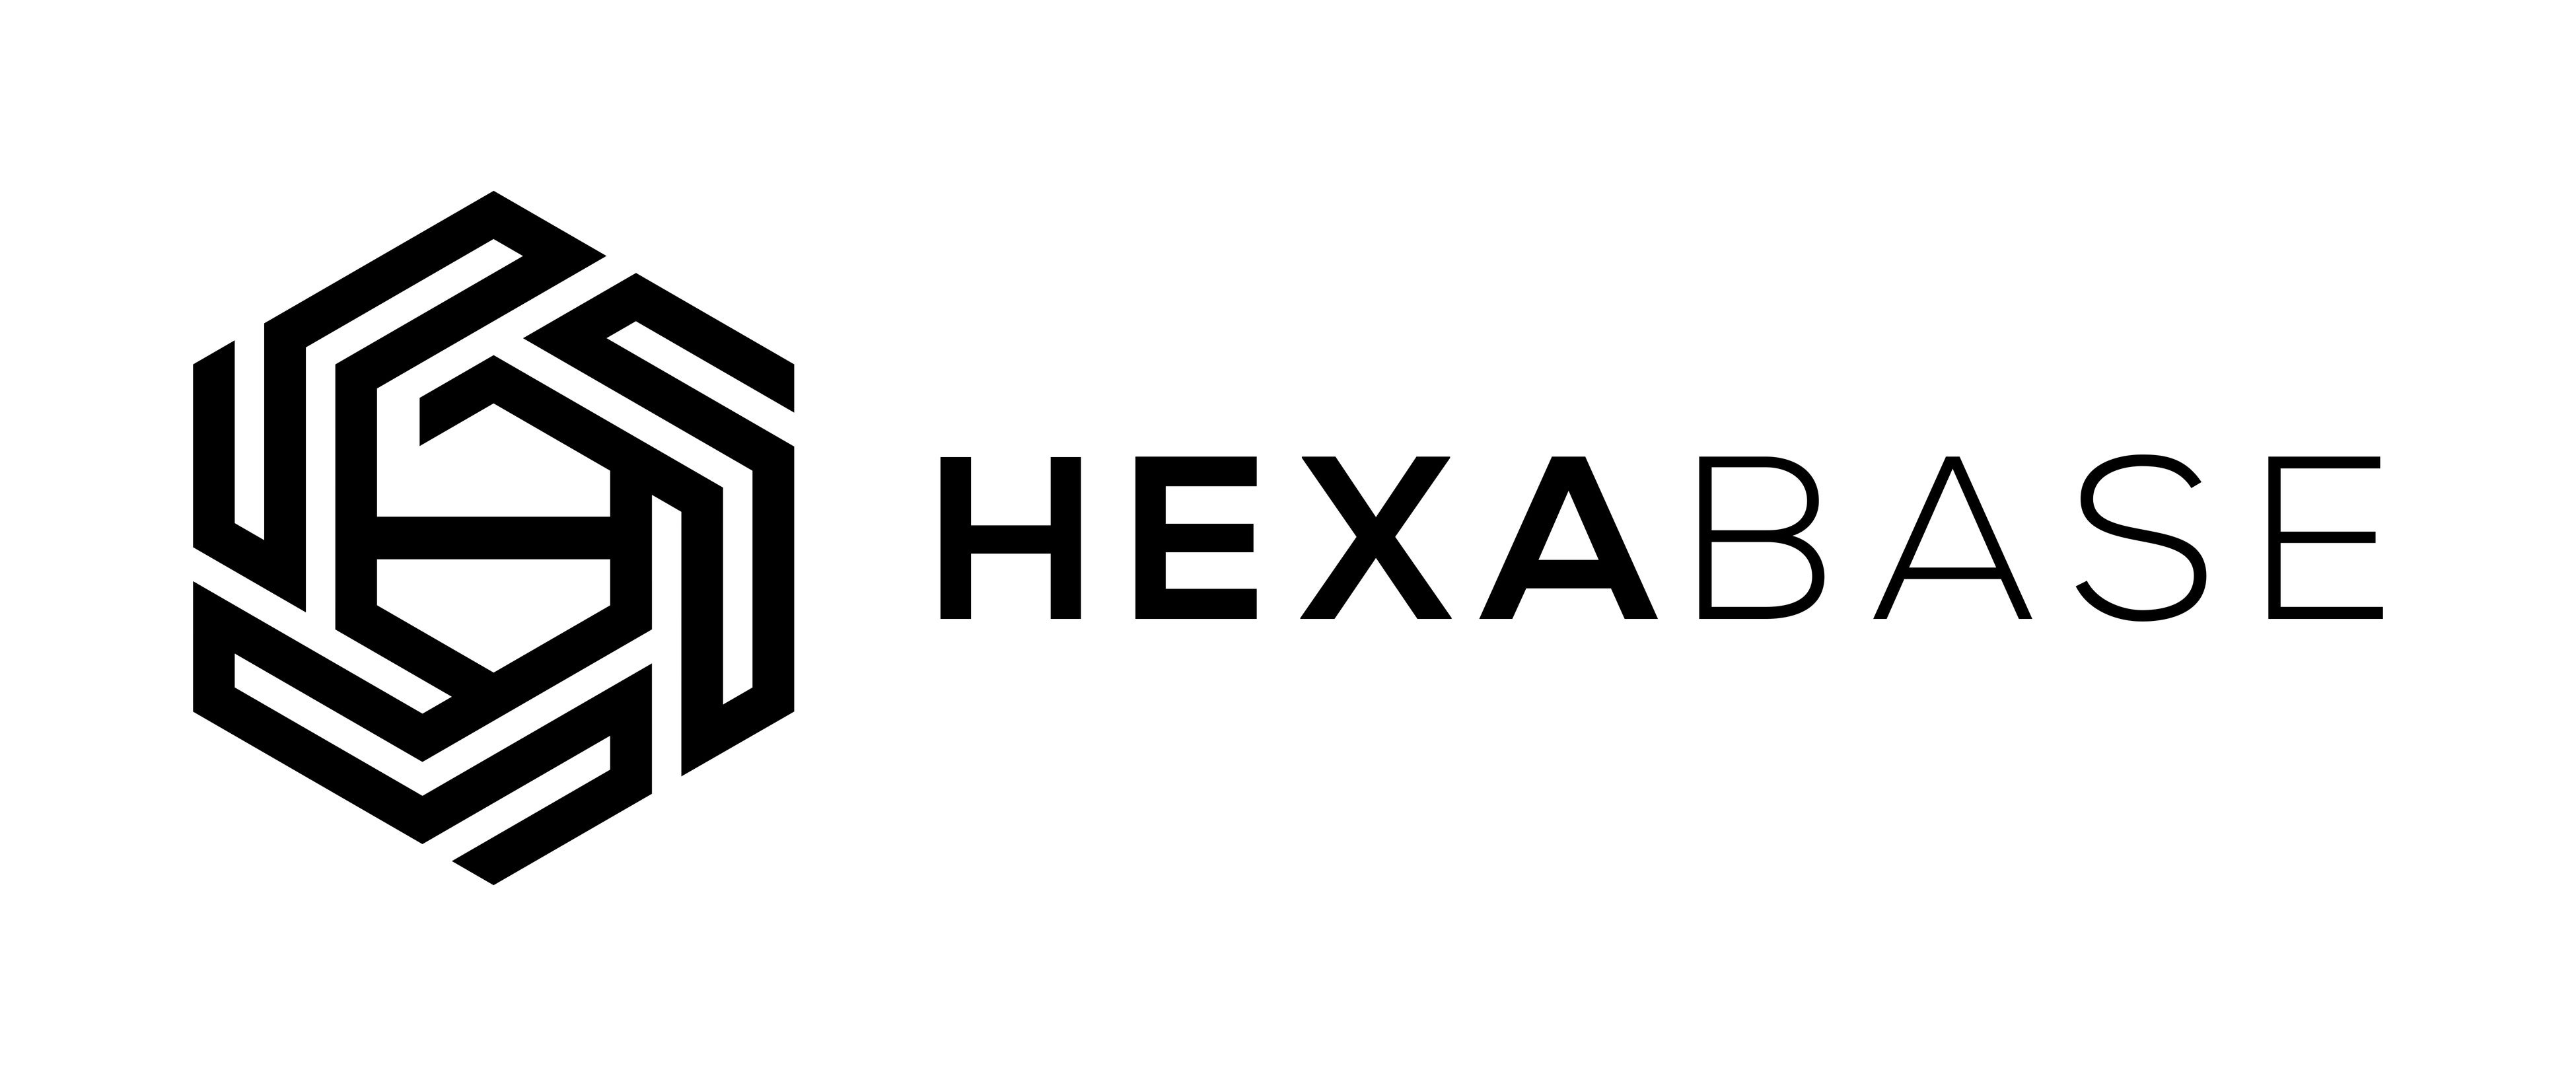 Hexabase、採用ページをリニューアル。AIを駆使、エンジニアを中心とした組織体制を強化